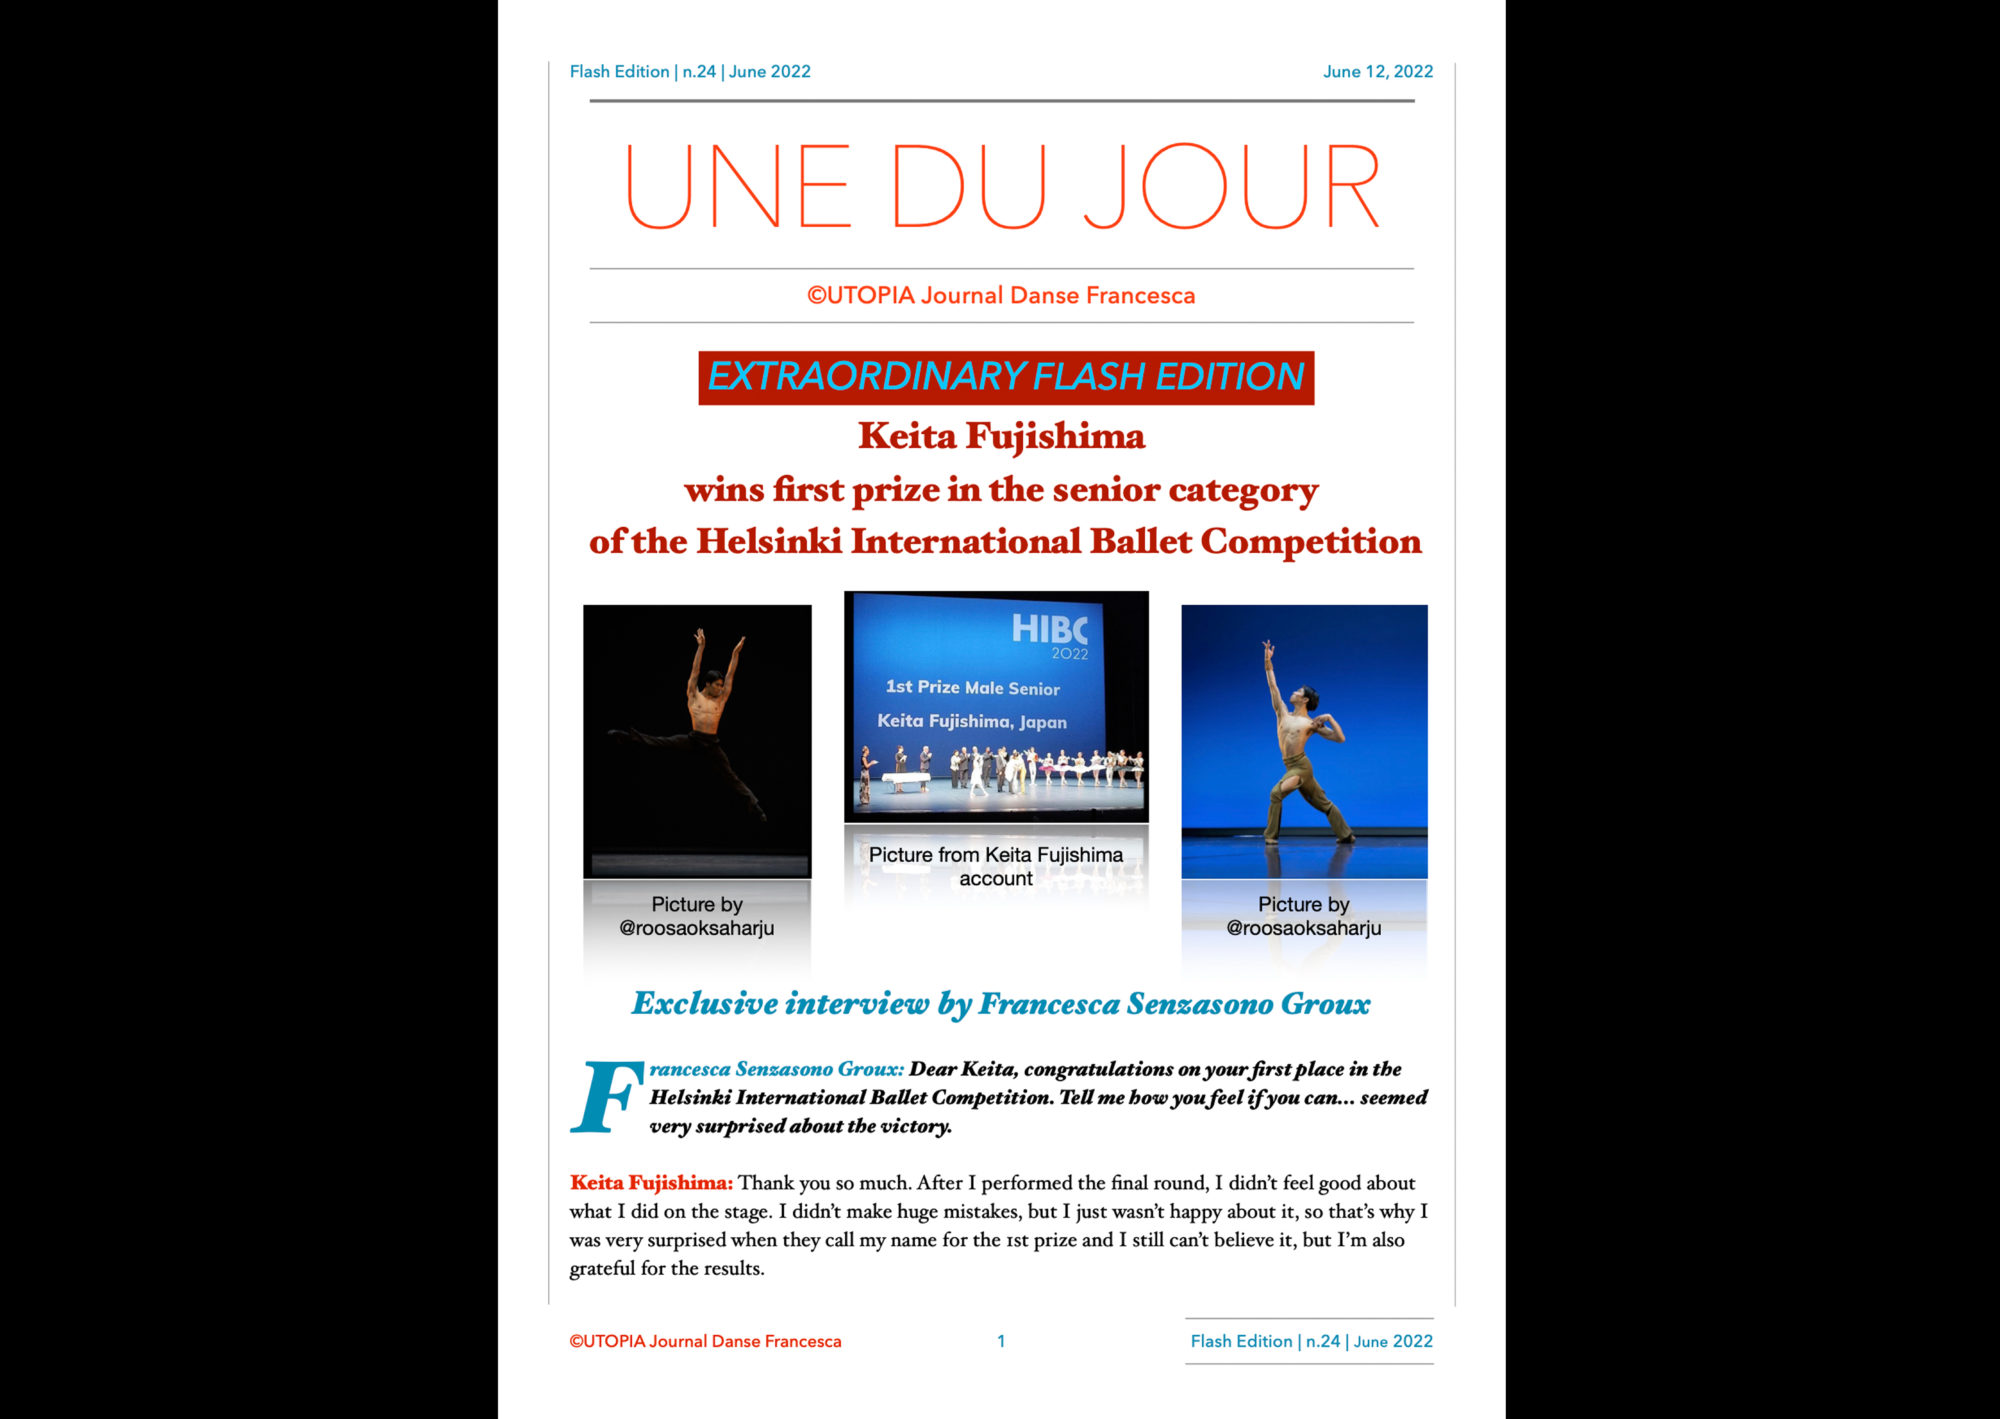 ©UTOPIA Journal Danse Francecsa Extraordinary Flash Edition n.24 June 11, 2022 page 1